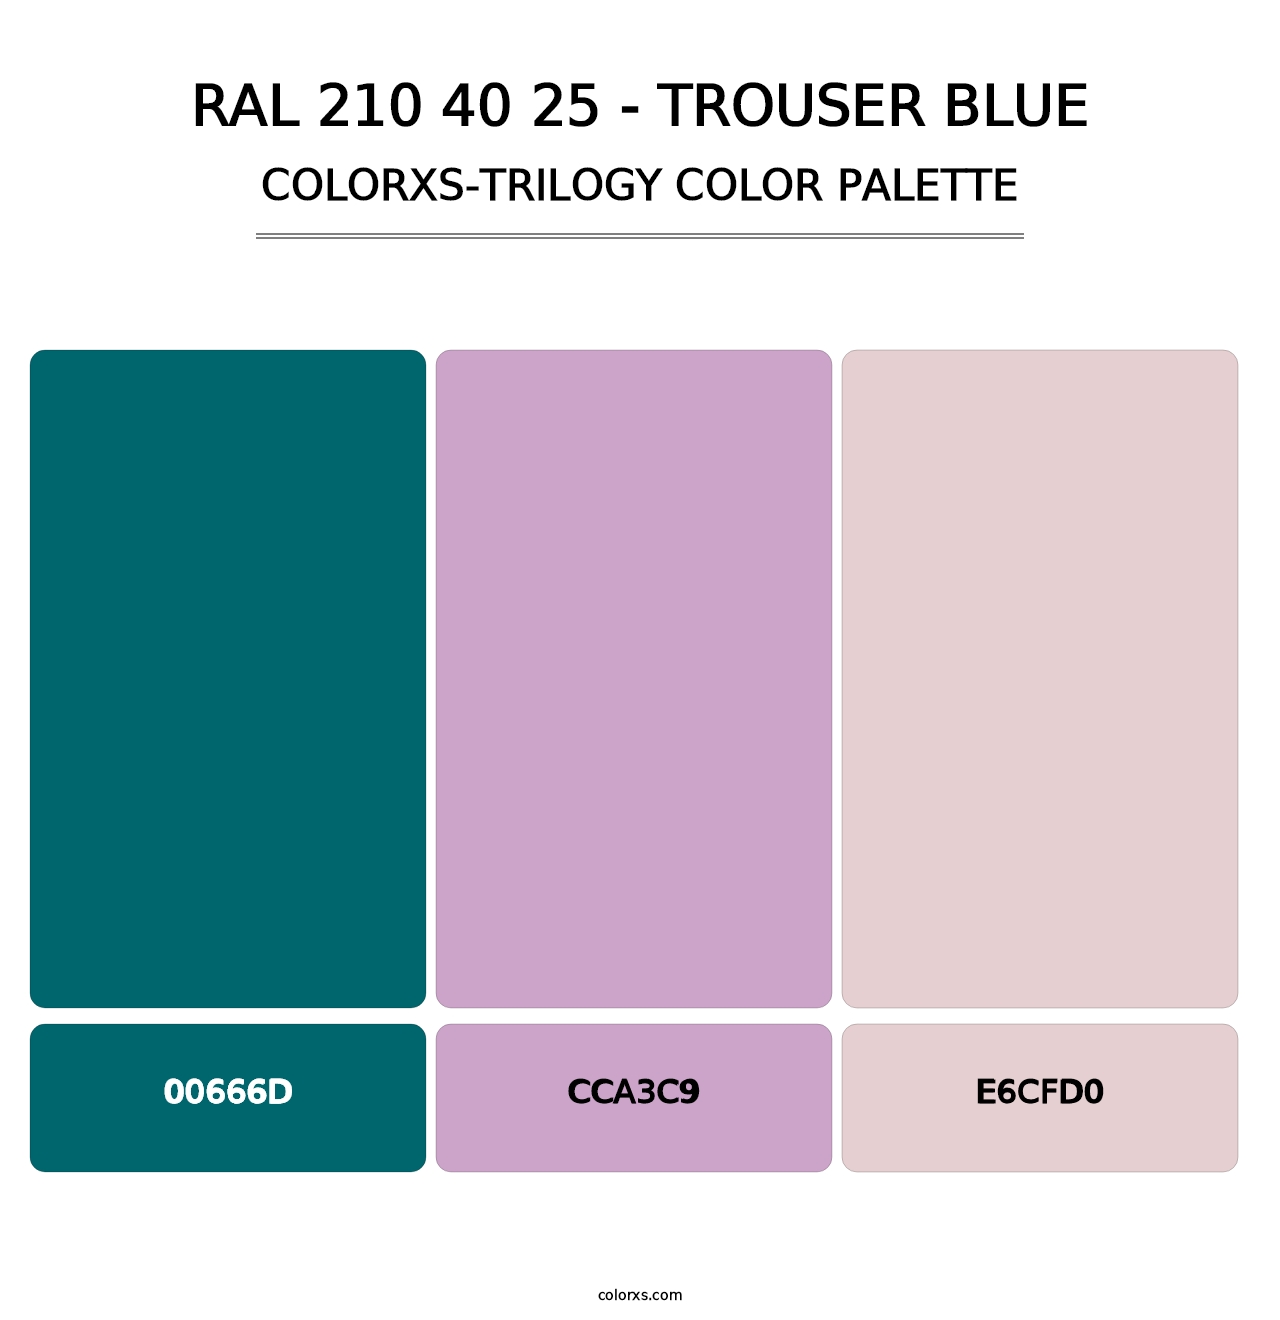 RAL 210 40 25 - Trouser Blue - Colorxs Trilogy Palette